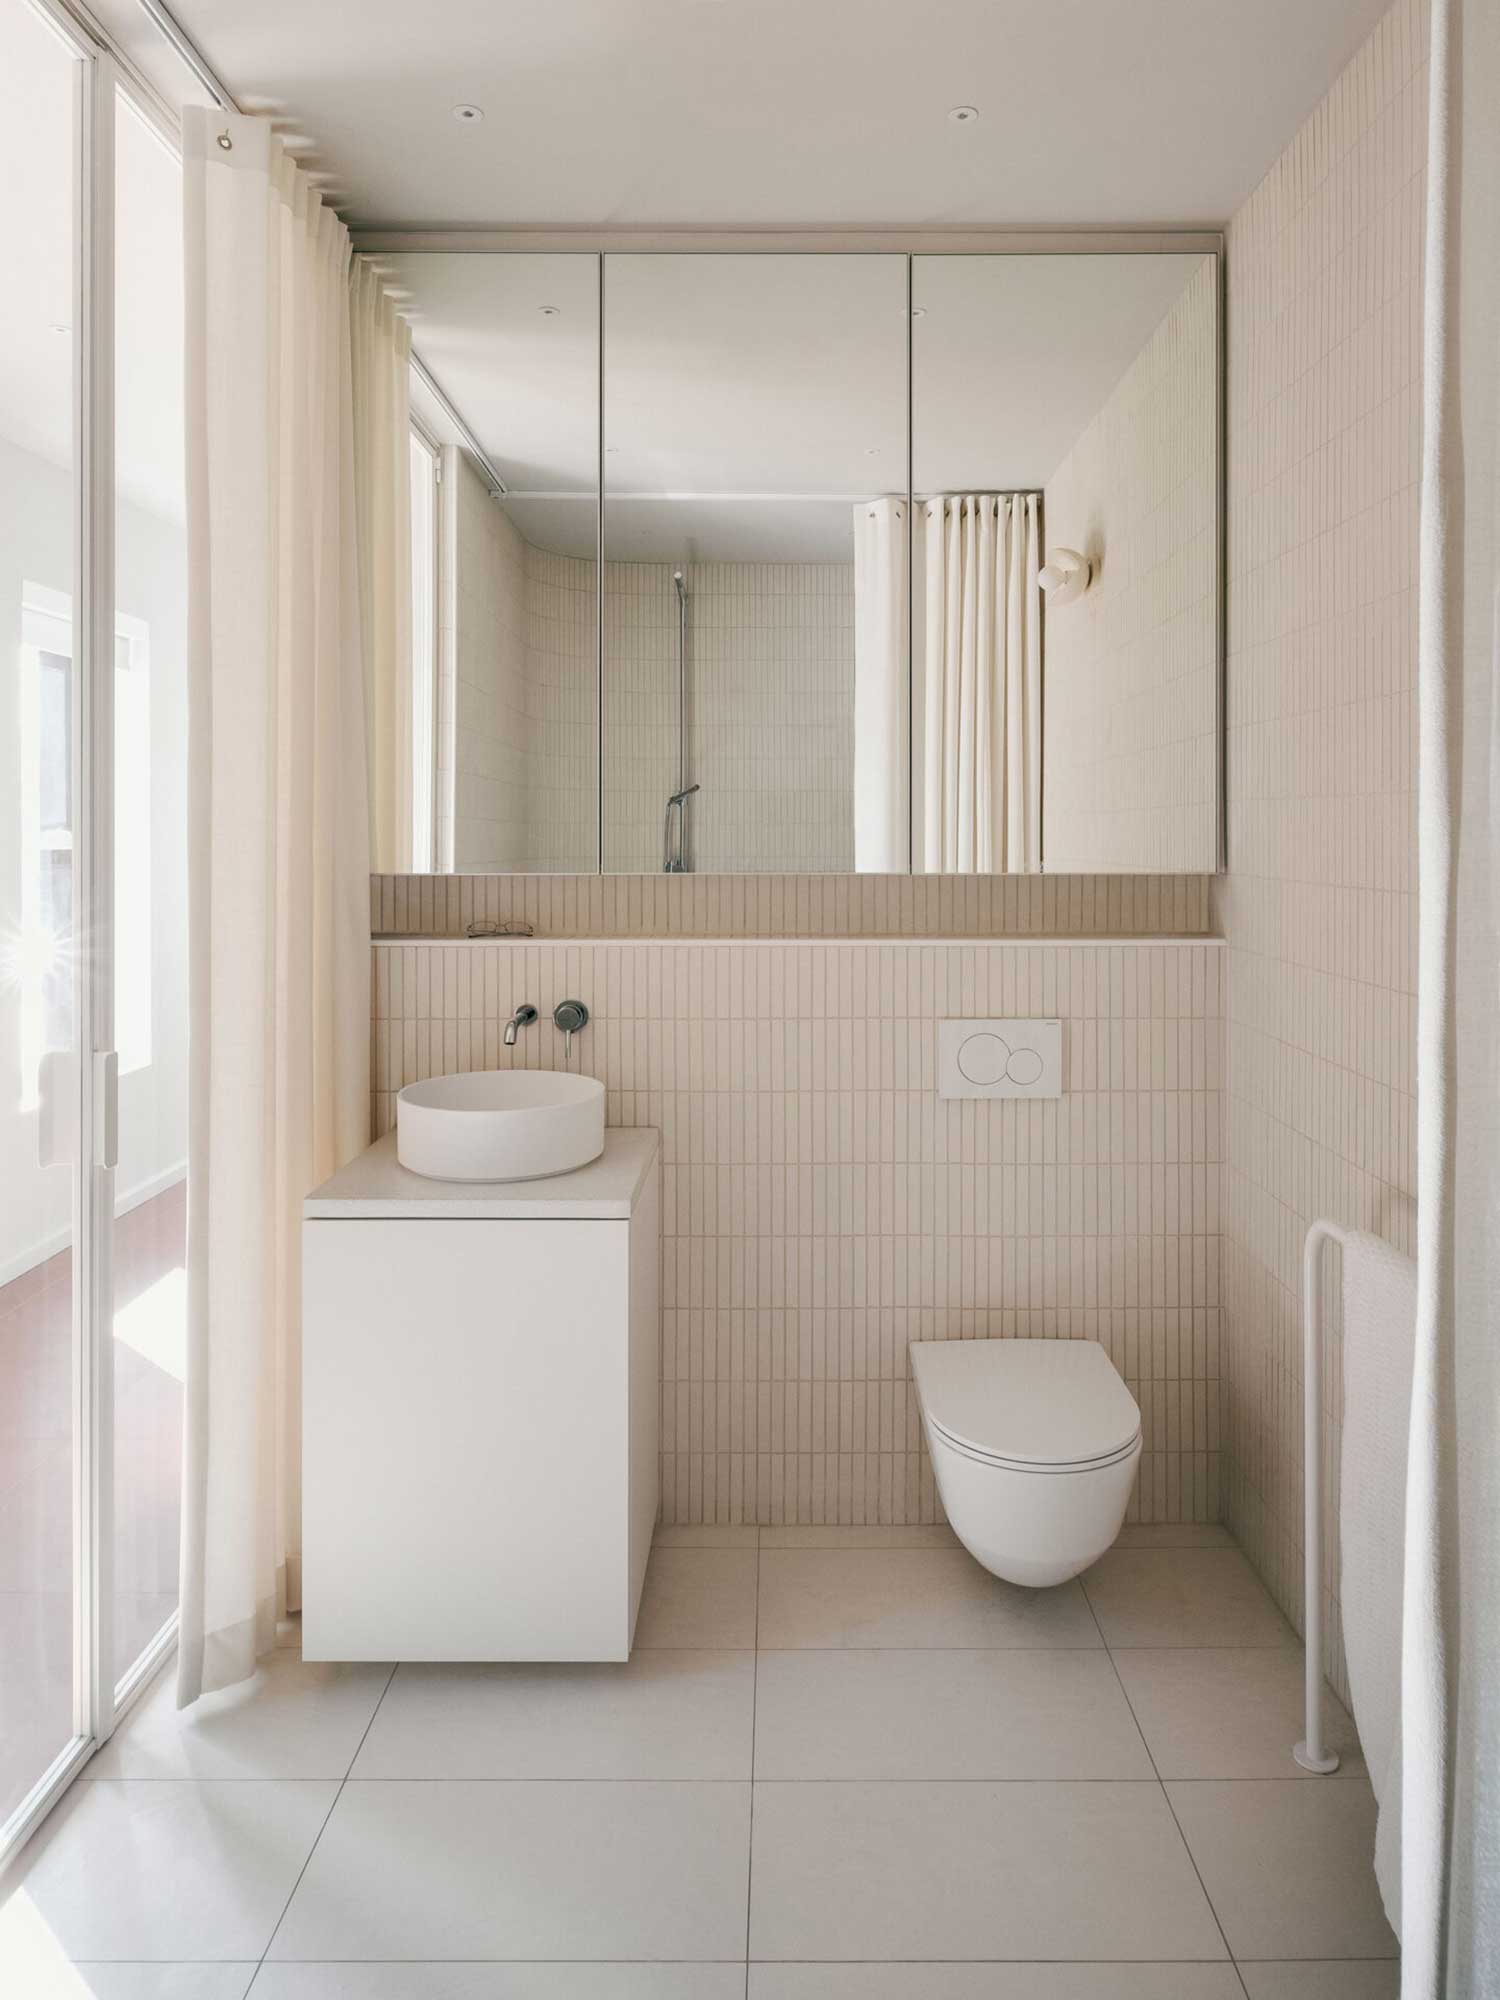 Modern bathroom with hanging fixtures